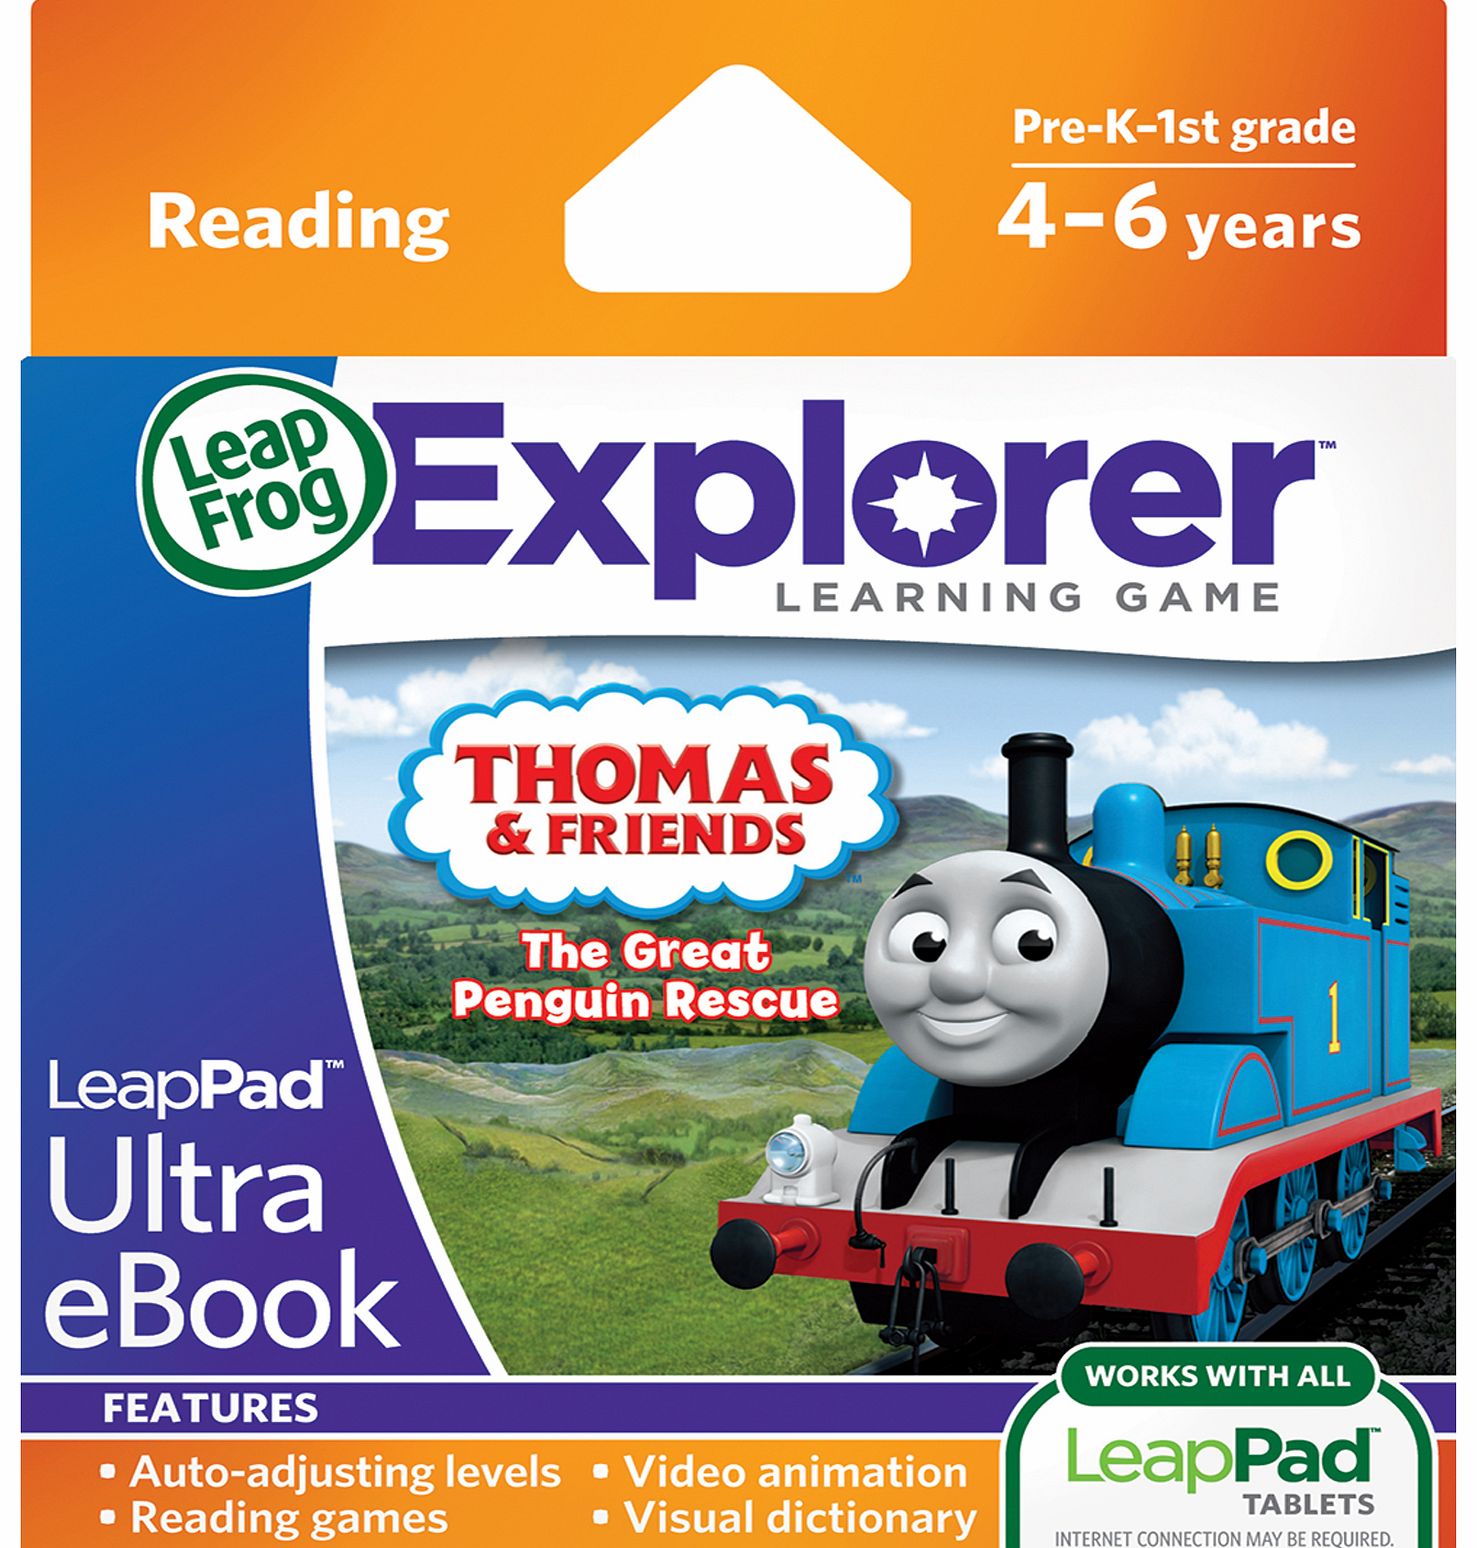 LeapPad Ultra eBook The Great Penguin Rescue